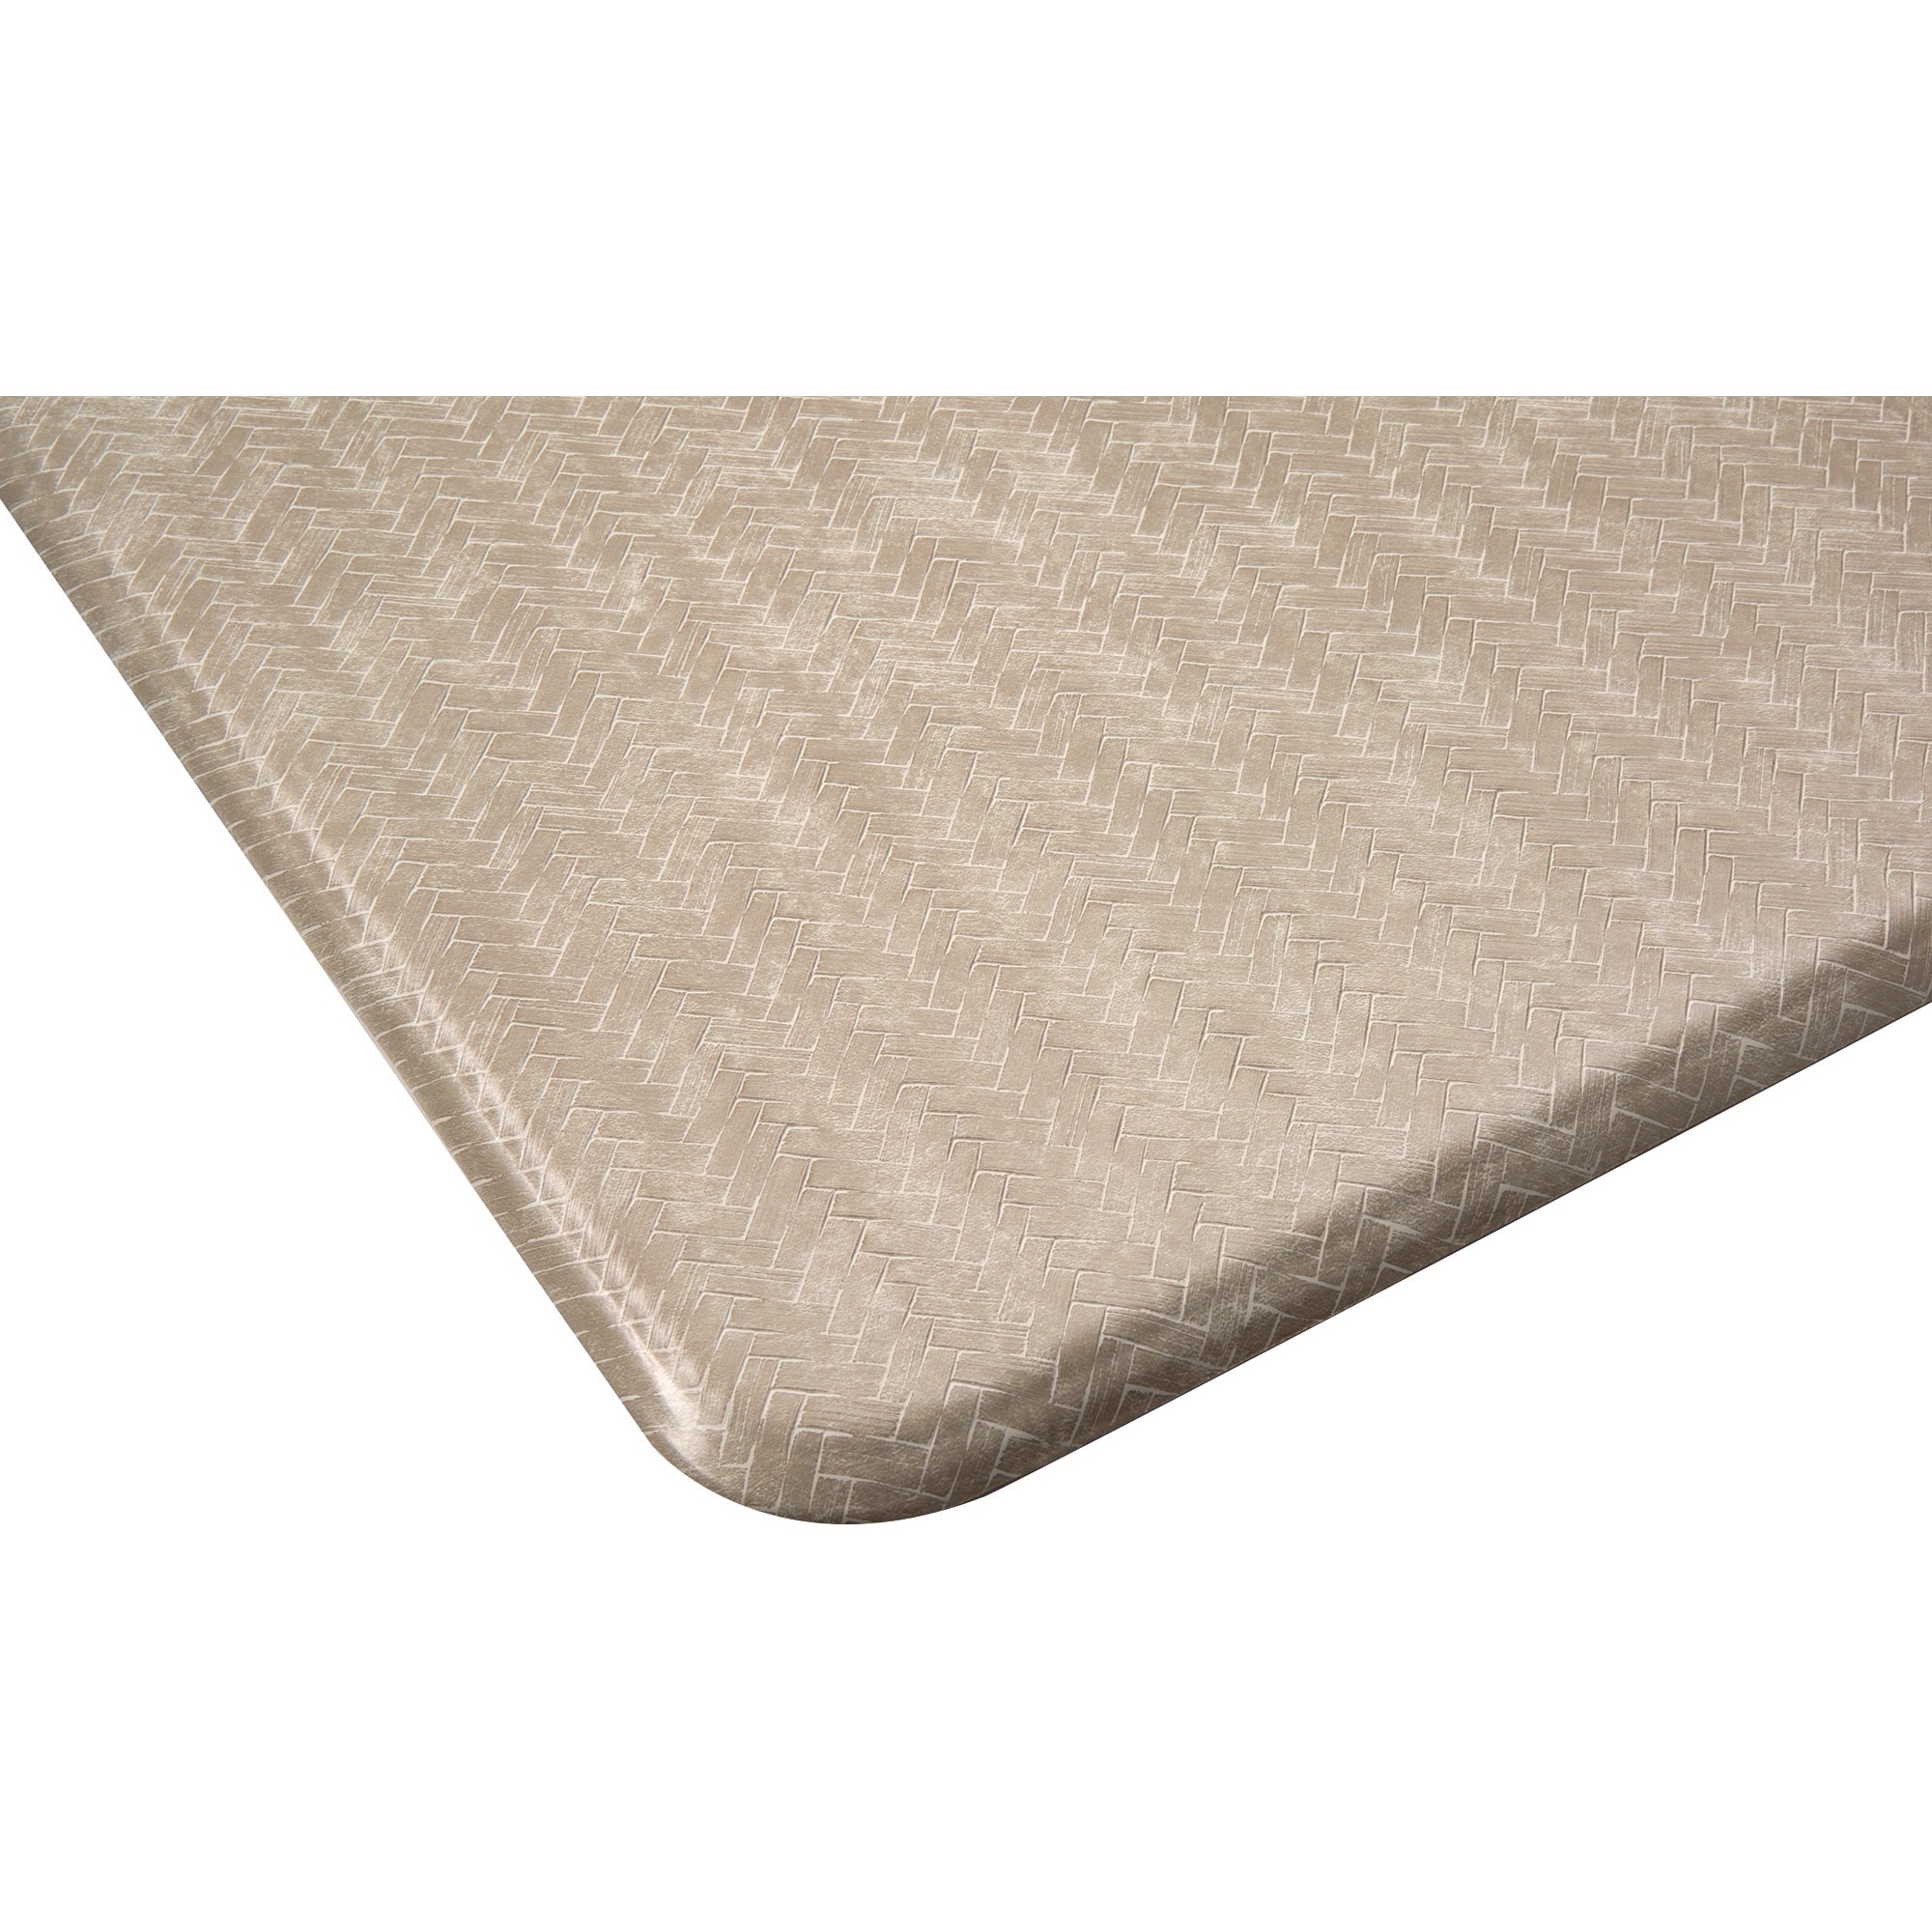 Imprint Anti Fatigue Comfort Cumulus 9 Croco Standard Mat, Rugs, Household